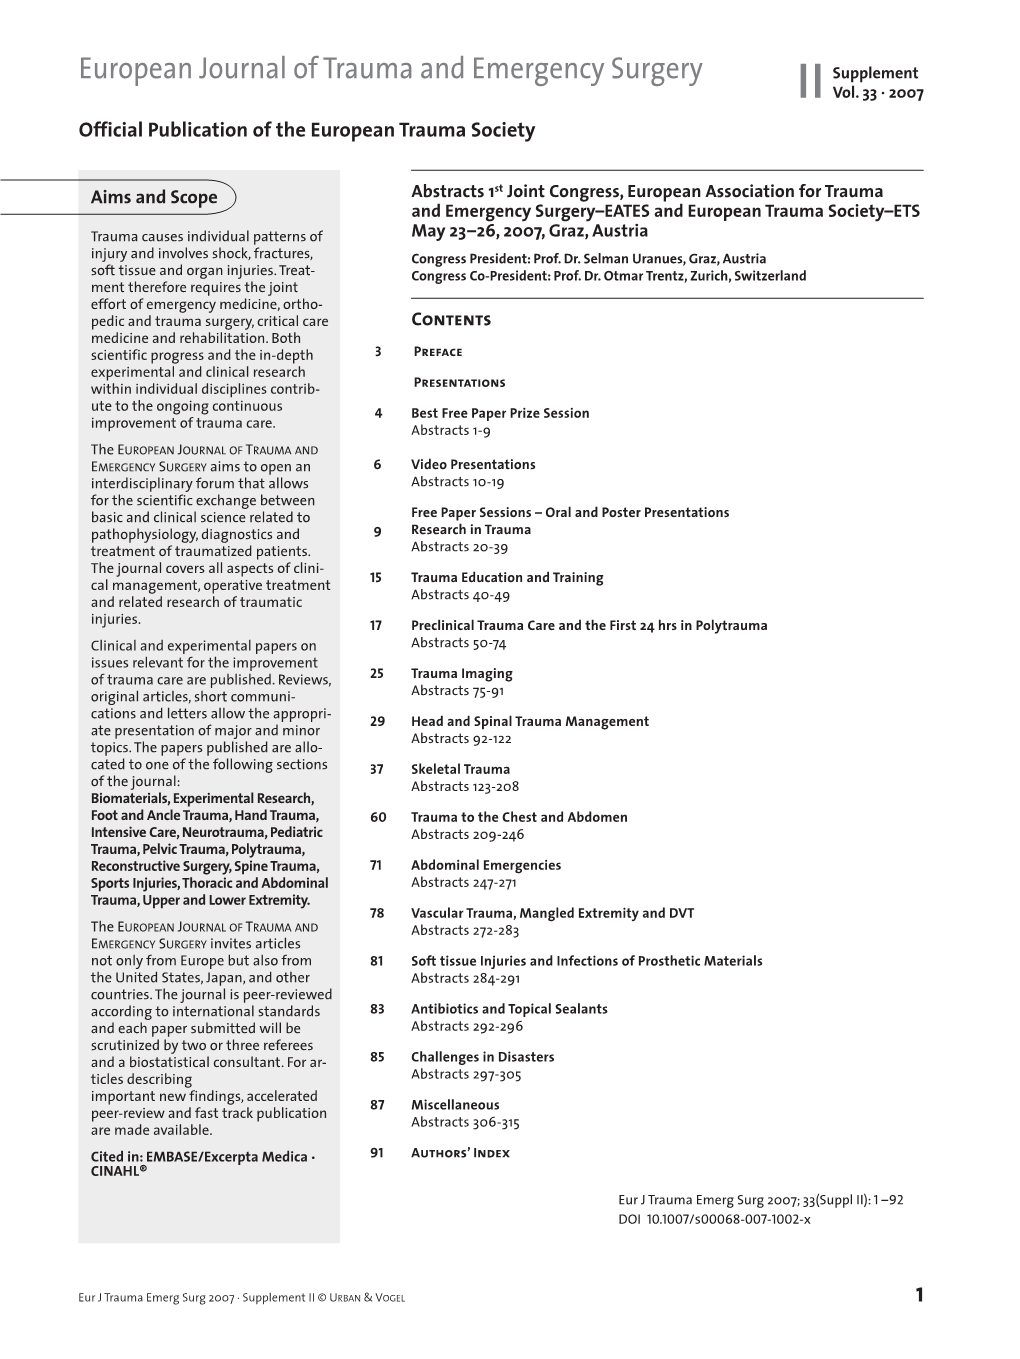 European Journal of Trauma and Emergency Surgery Supplement II Vol